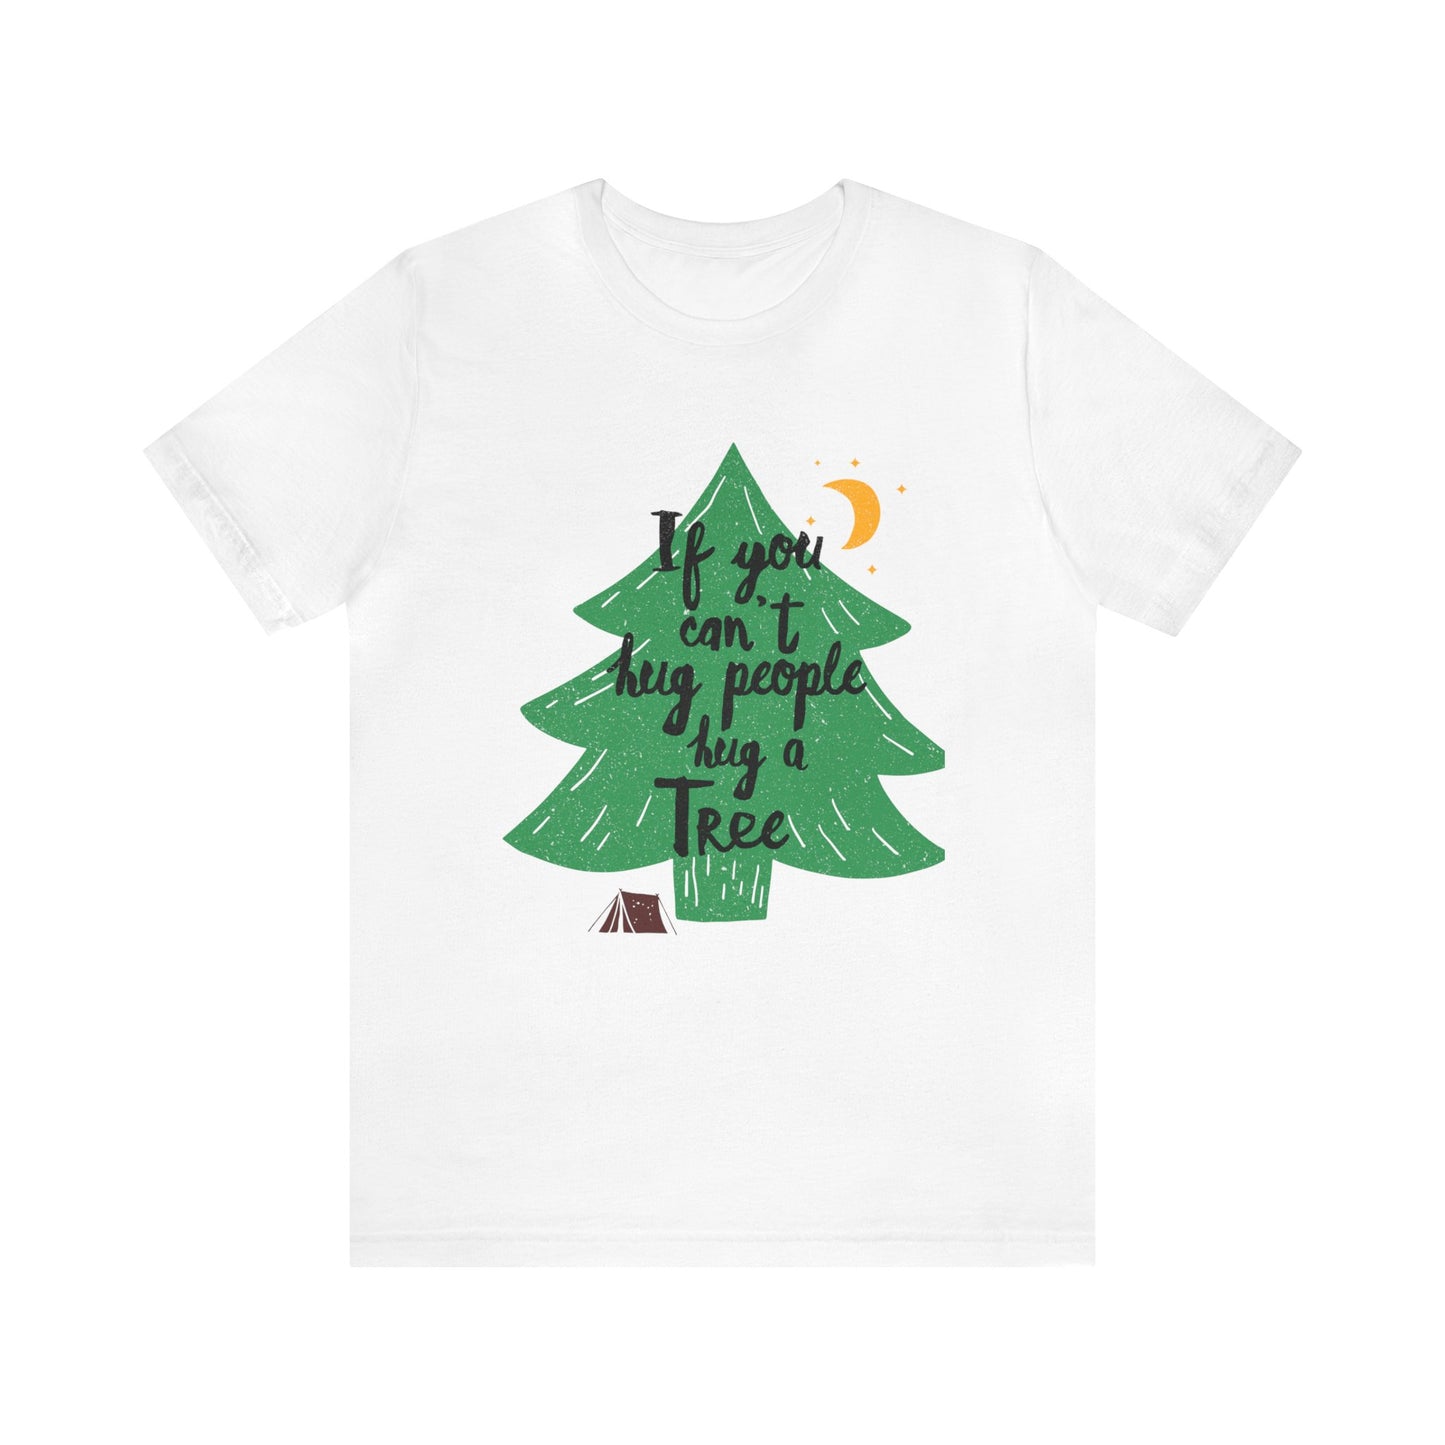 Hug a tree camping Adult Unisex Tshirt